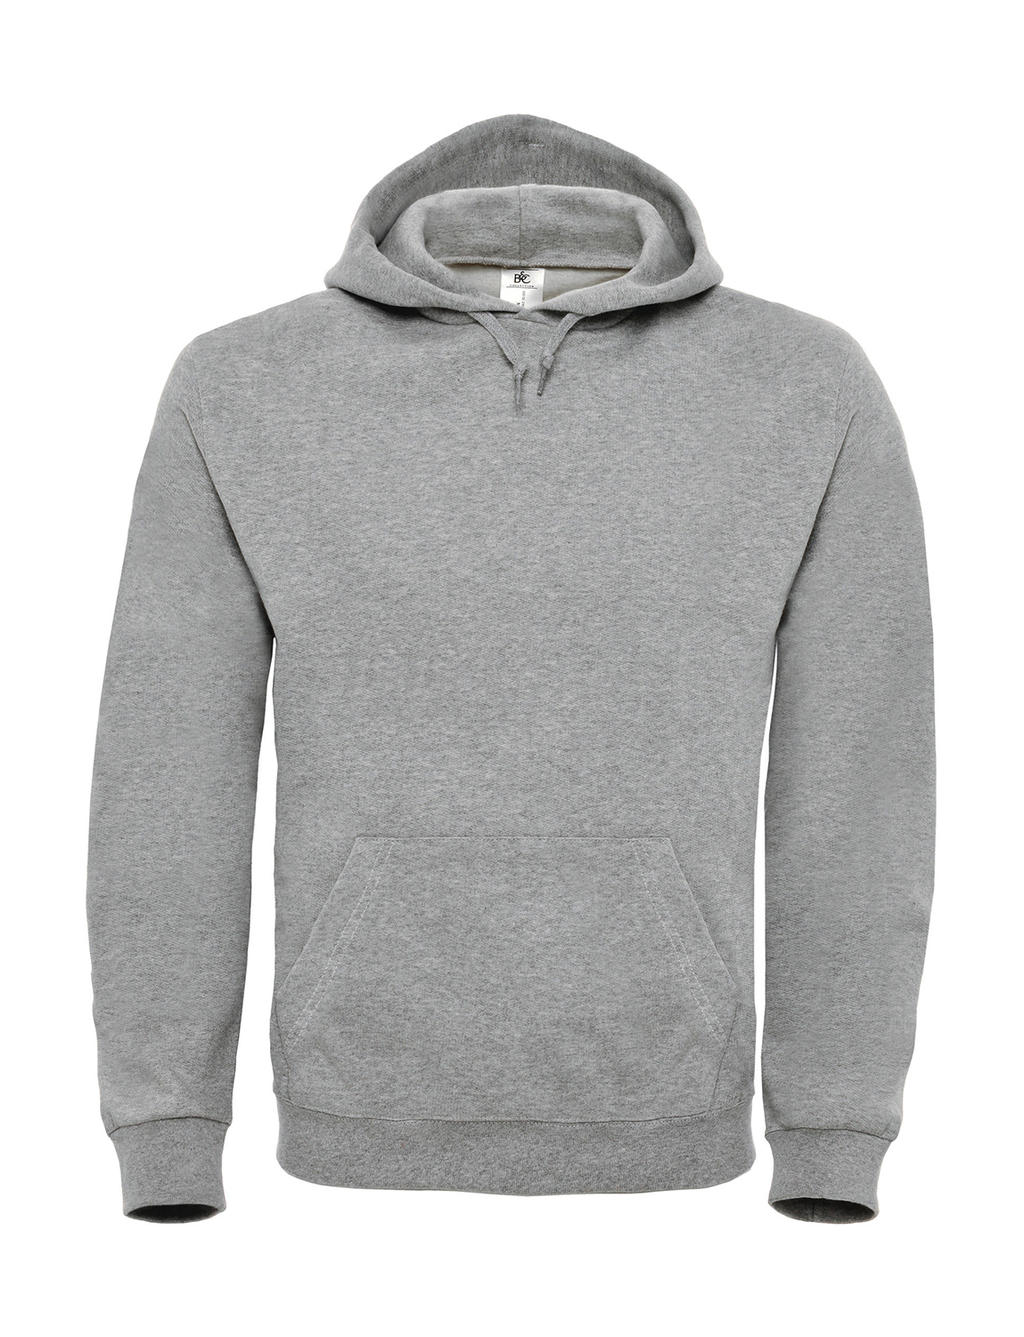  ID.003 Cotton Rich Hooded Sweatshirt in Farbe Heather Grey